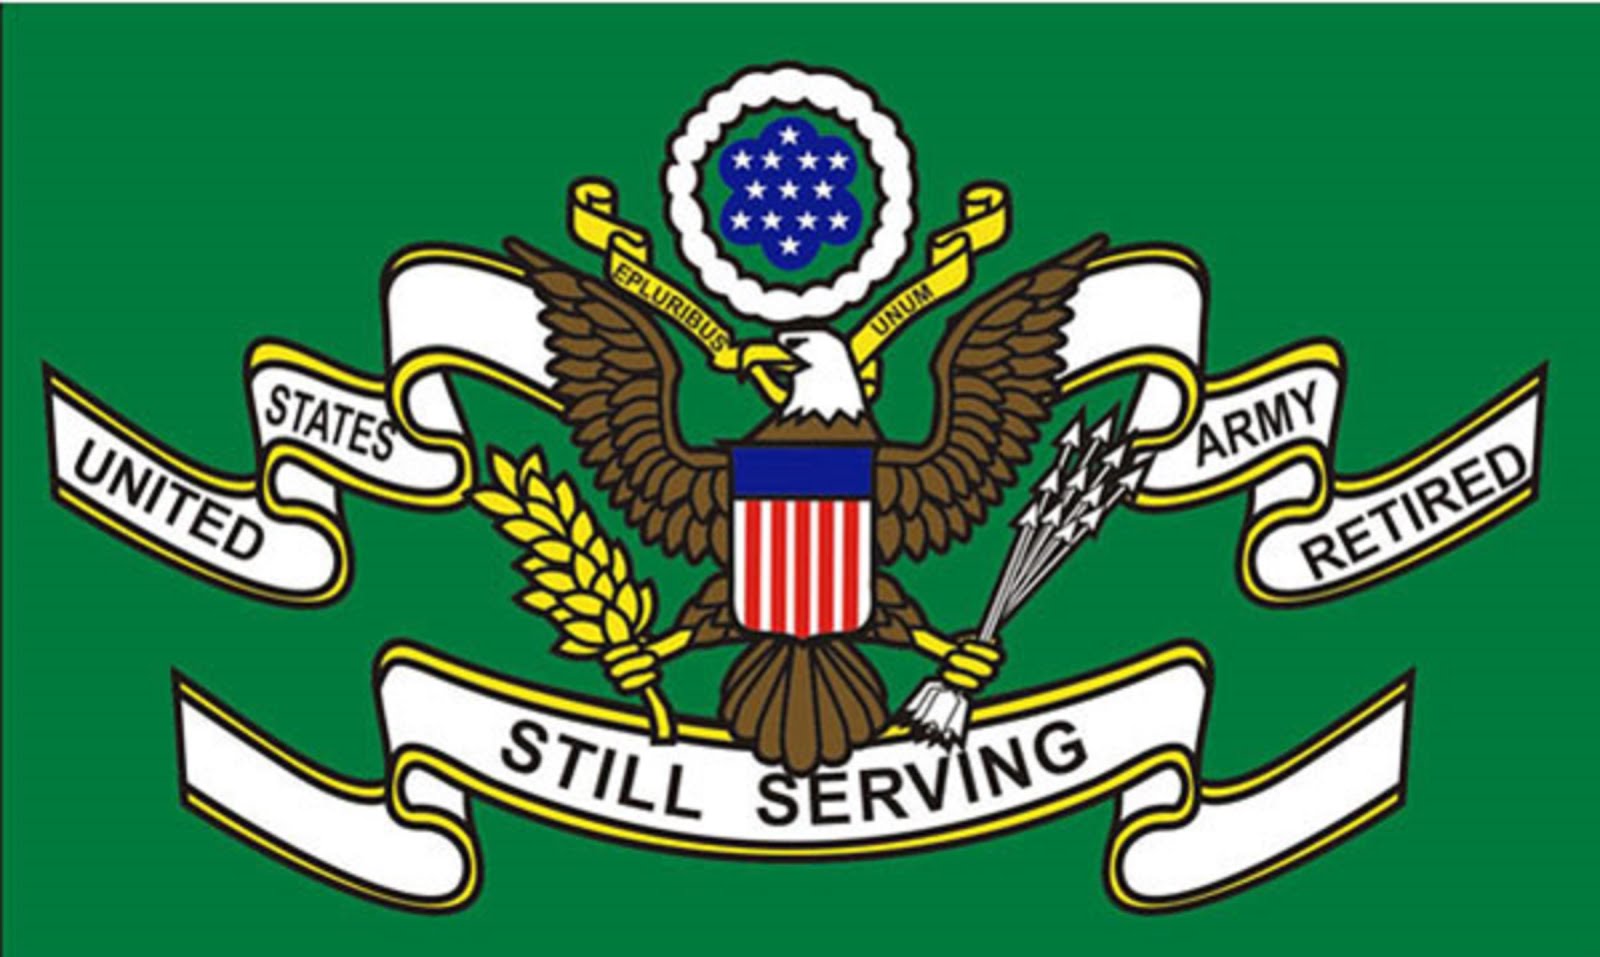 U.S. ARMY * NEVER RETIRED * YET STILL SERVING